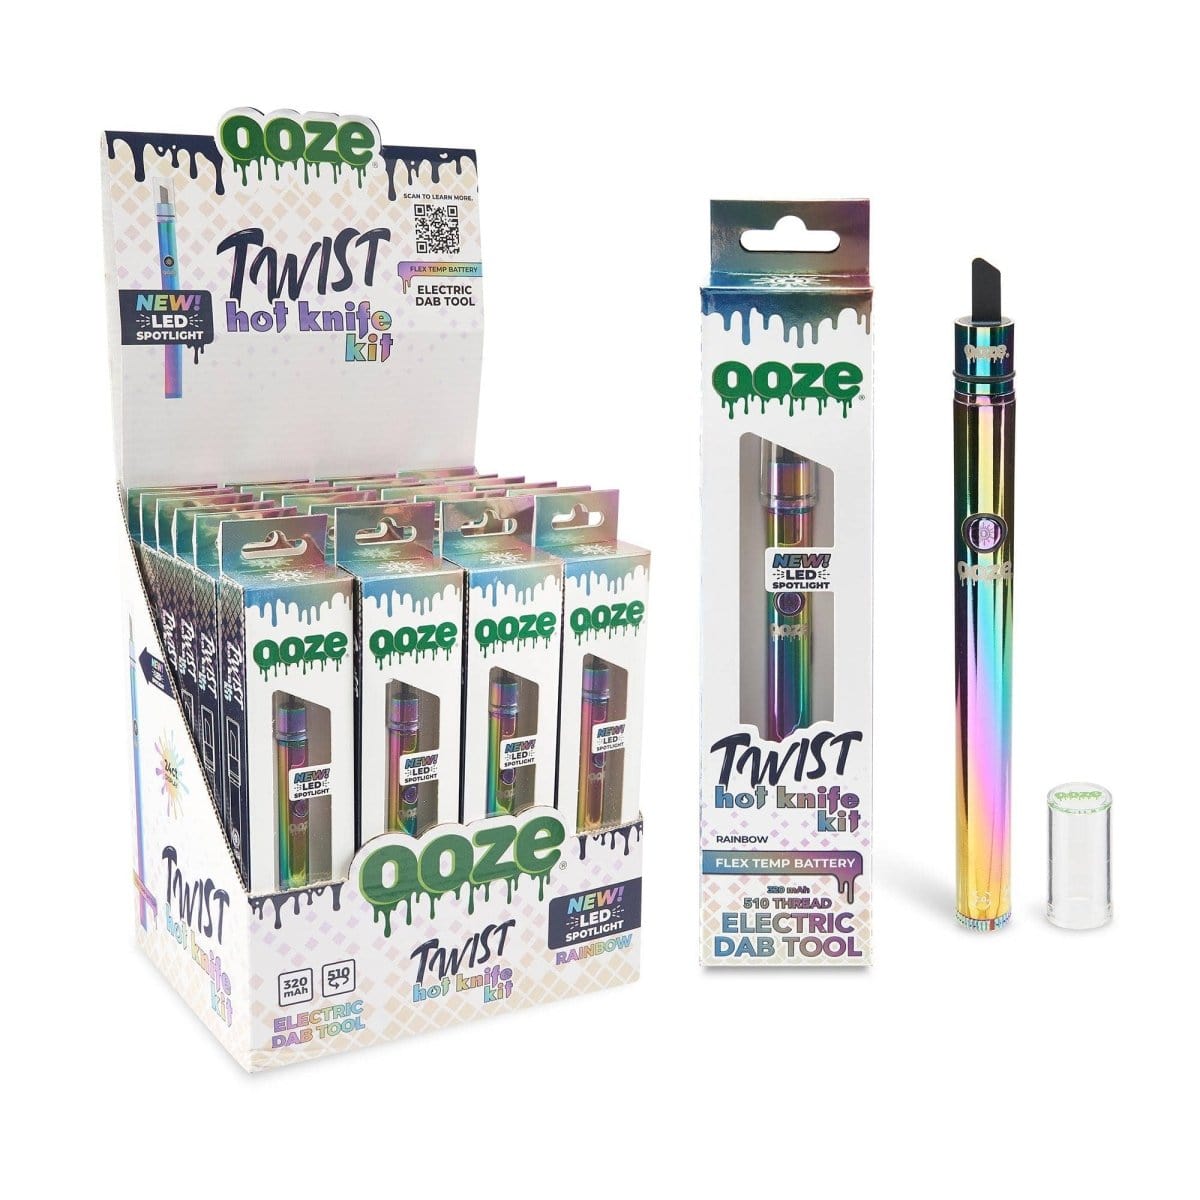 Ooze Batteries and Vapes Ooze Twist Hot Knife Kit – New LED Spotlight